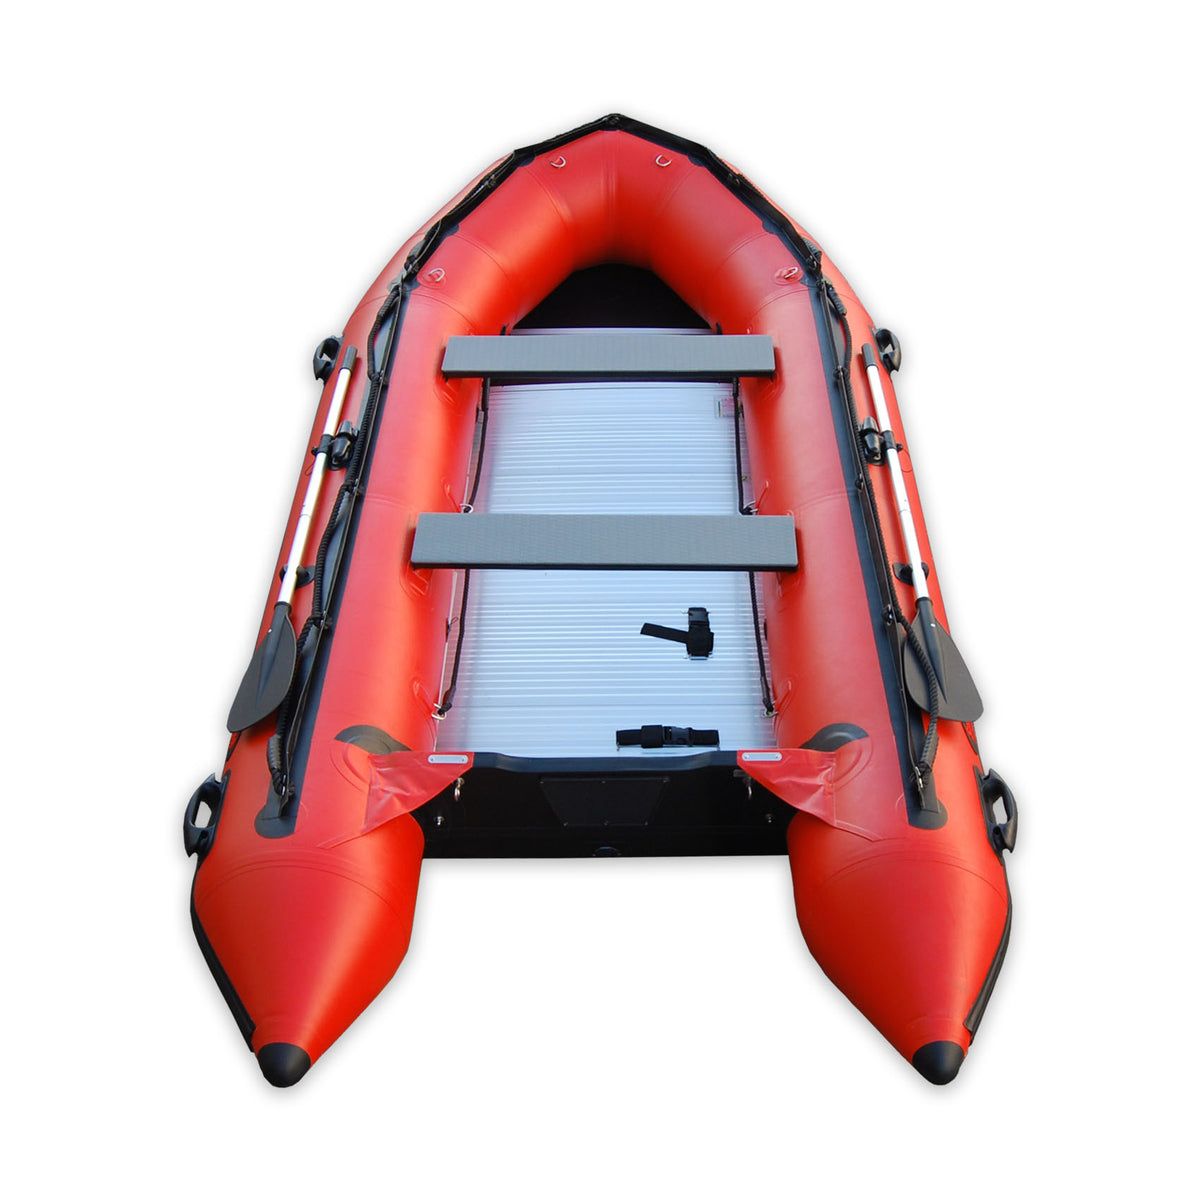 Seamax Ocean380 12.5 Feet Heavy Duty Inflatable Boat - Seamax Marine